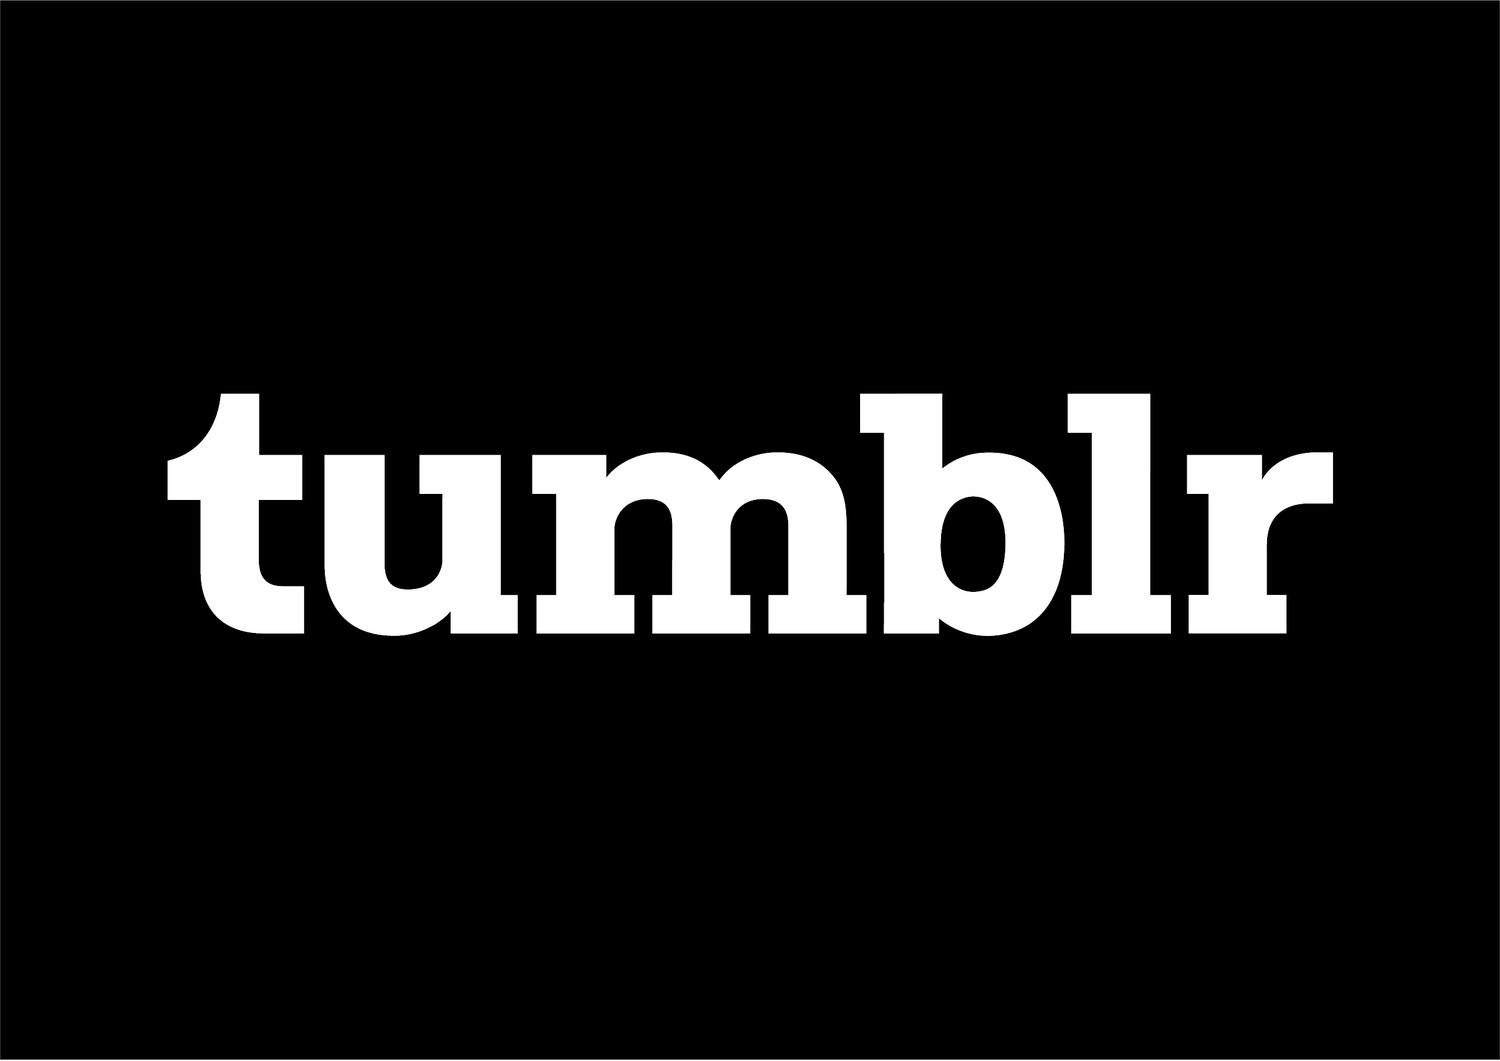 Tumblr Logo - DINAMO: Projects: Tumblr